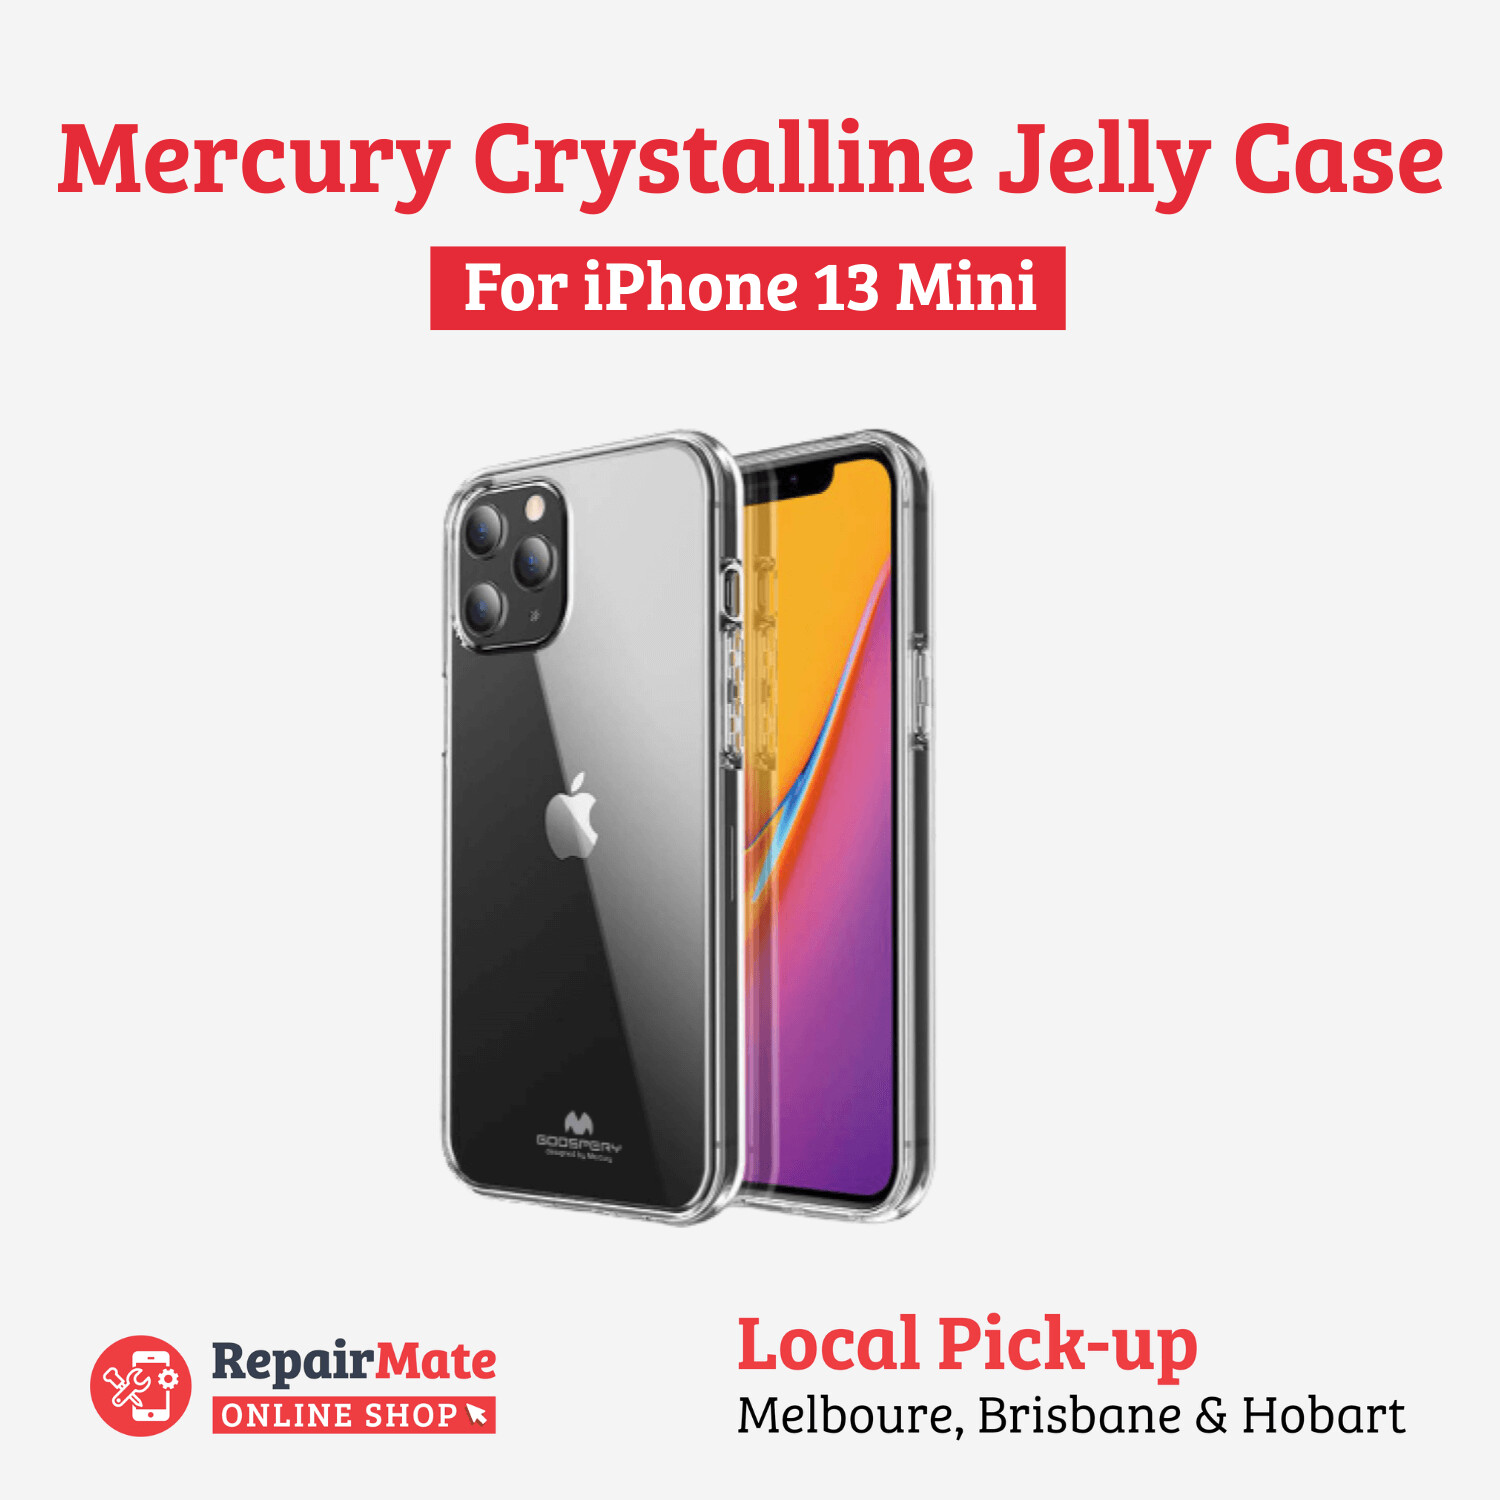 iPhone 13 Mini Mercury Crystalline Jelly Case Cover